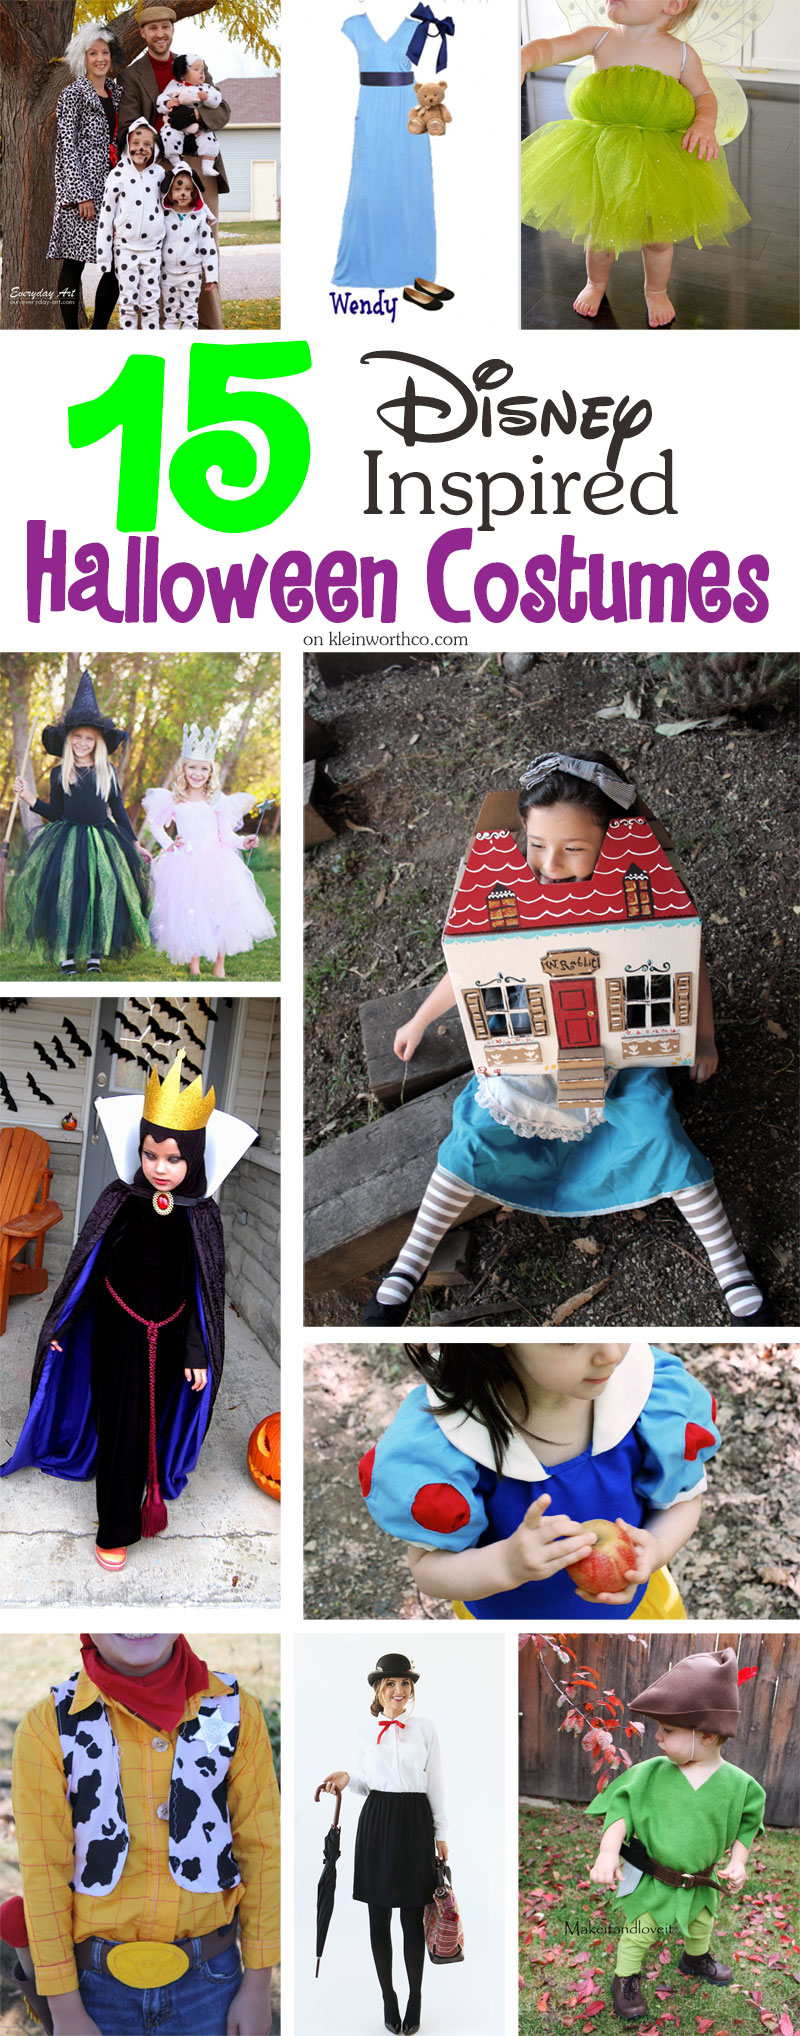 15 Disney Inspired Halloween Costumes - Kleinworth & Co